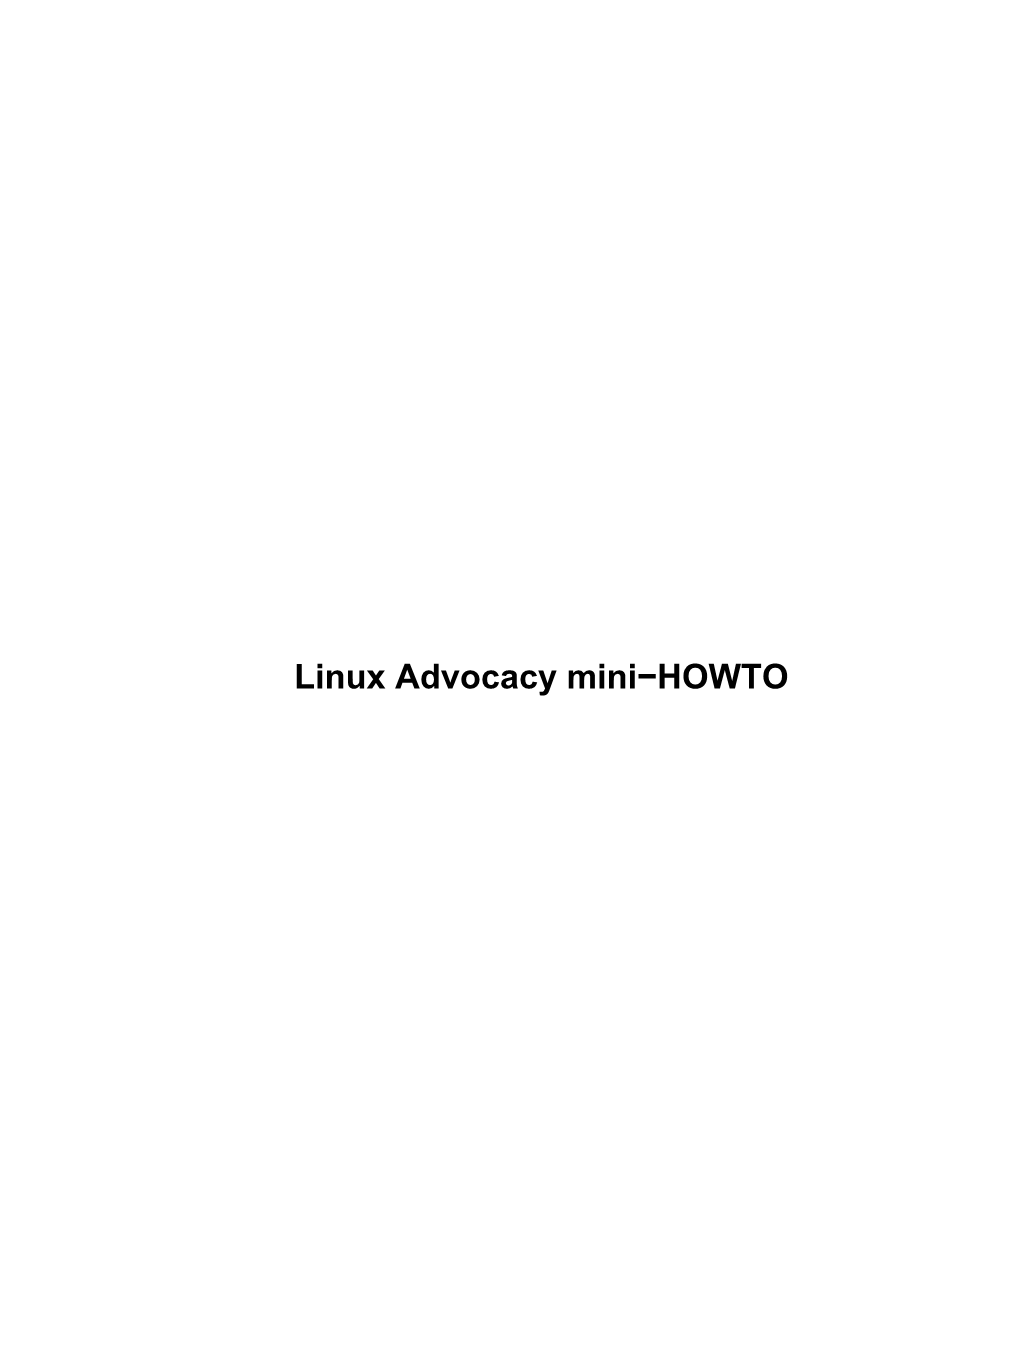 Linux Advocacy Mini-HOWTO